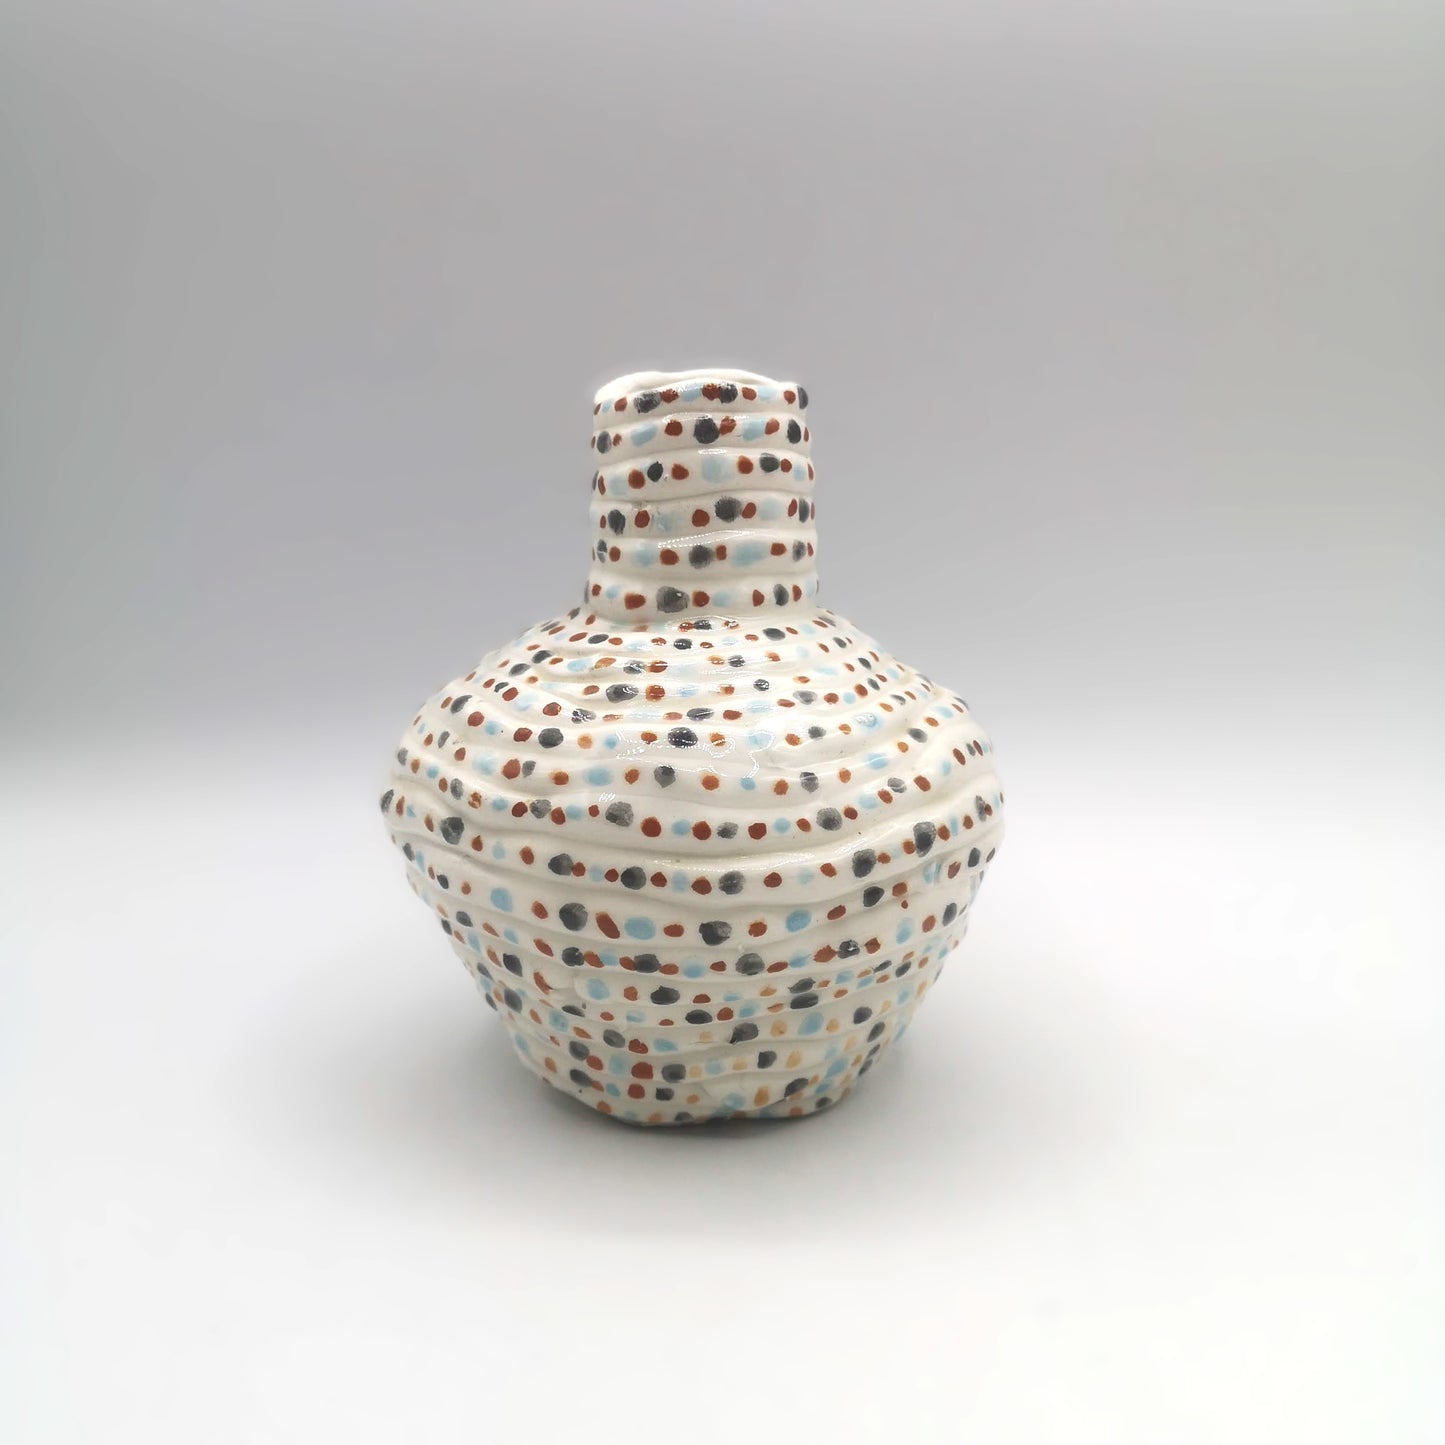 Handmade White Ceramic Vase with Colorful Handpainted Spots – Eclectic Decorative Vase for Home & Garden – Unique Gift Idea – 15cm x 12cm